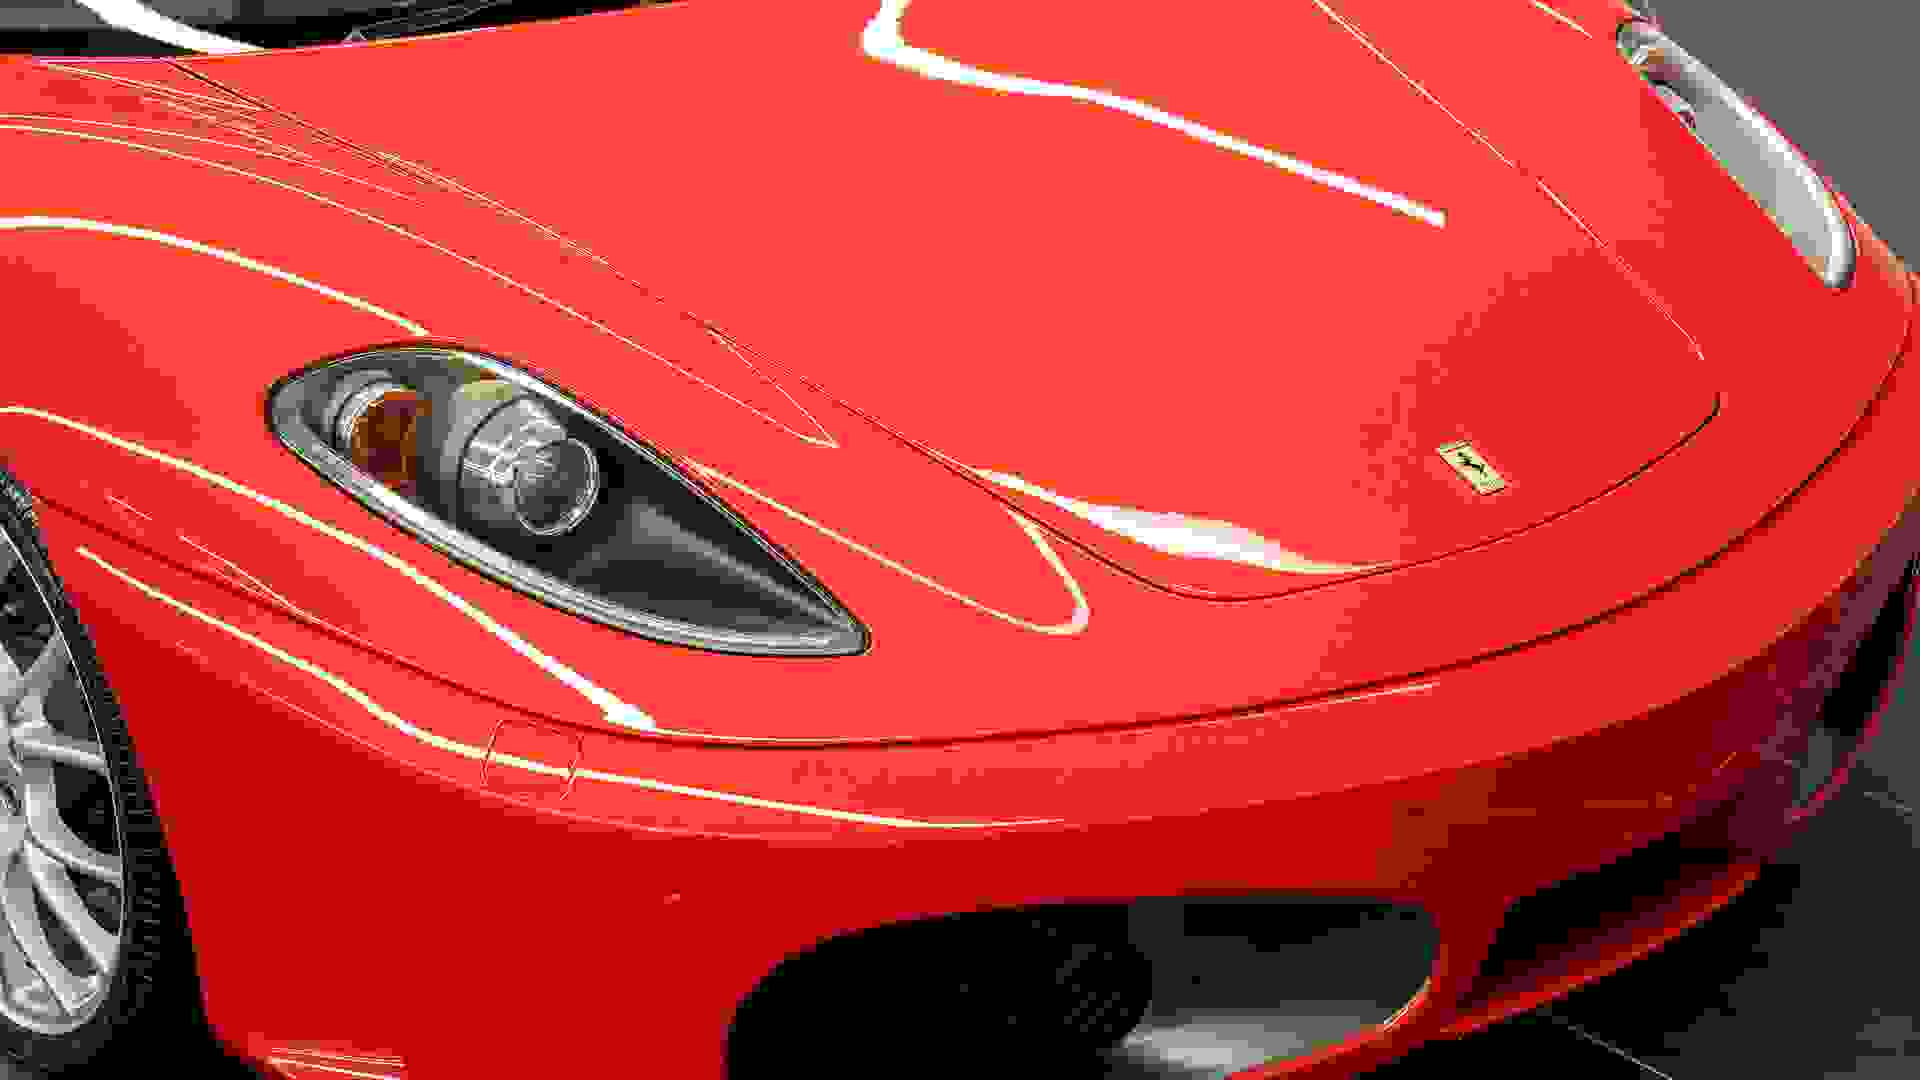 Ferrari F430 Spider Photo 5fd6af77-f566-4220-8520-f9786f3a165a.jpg